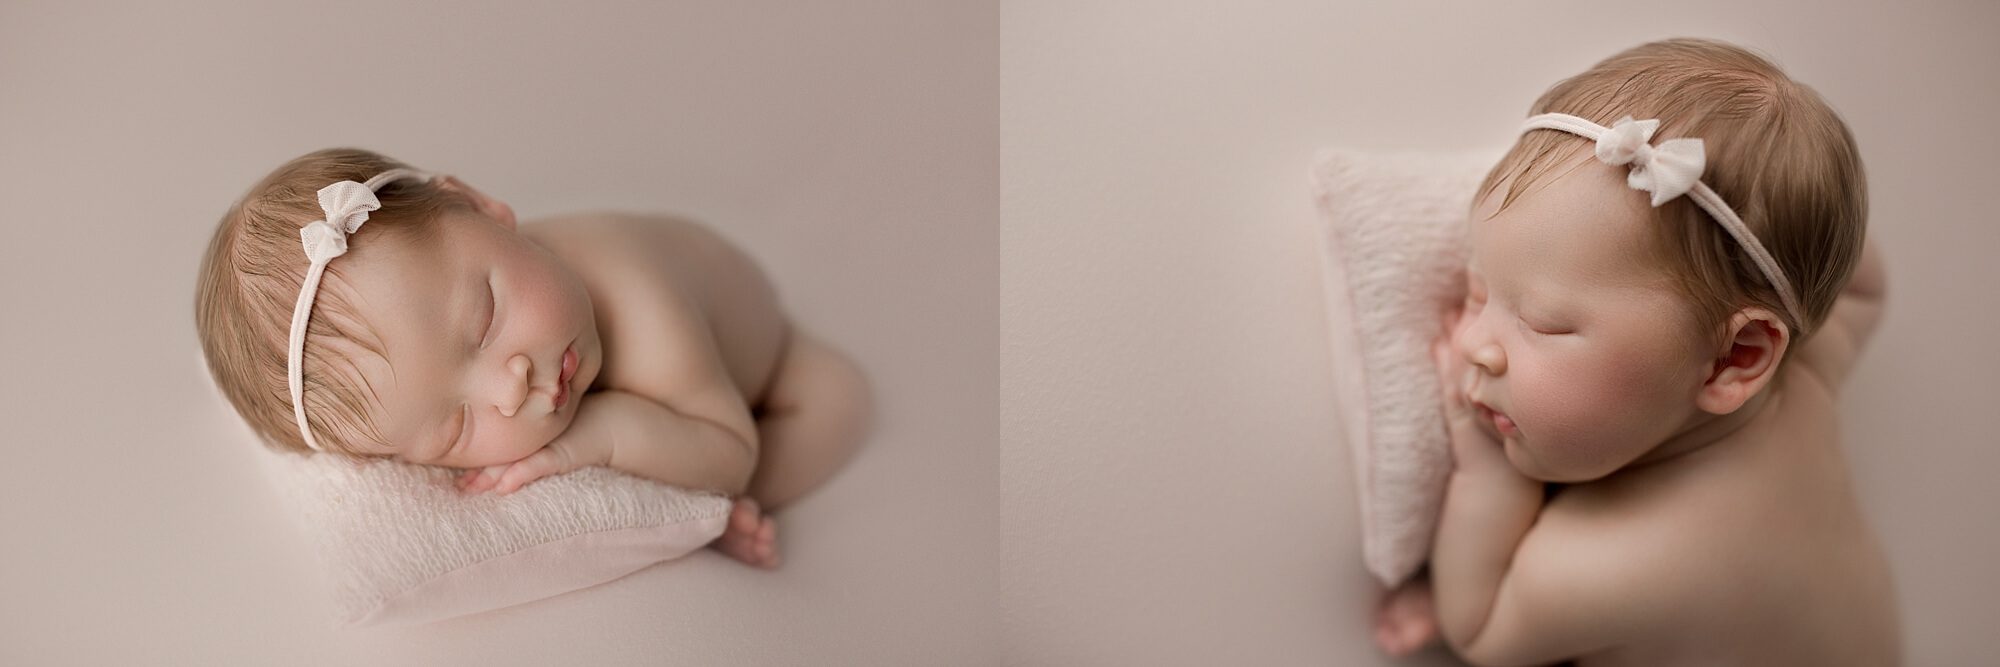 newborn photography seattle - baby girl studio session